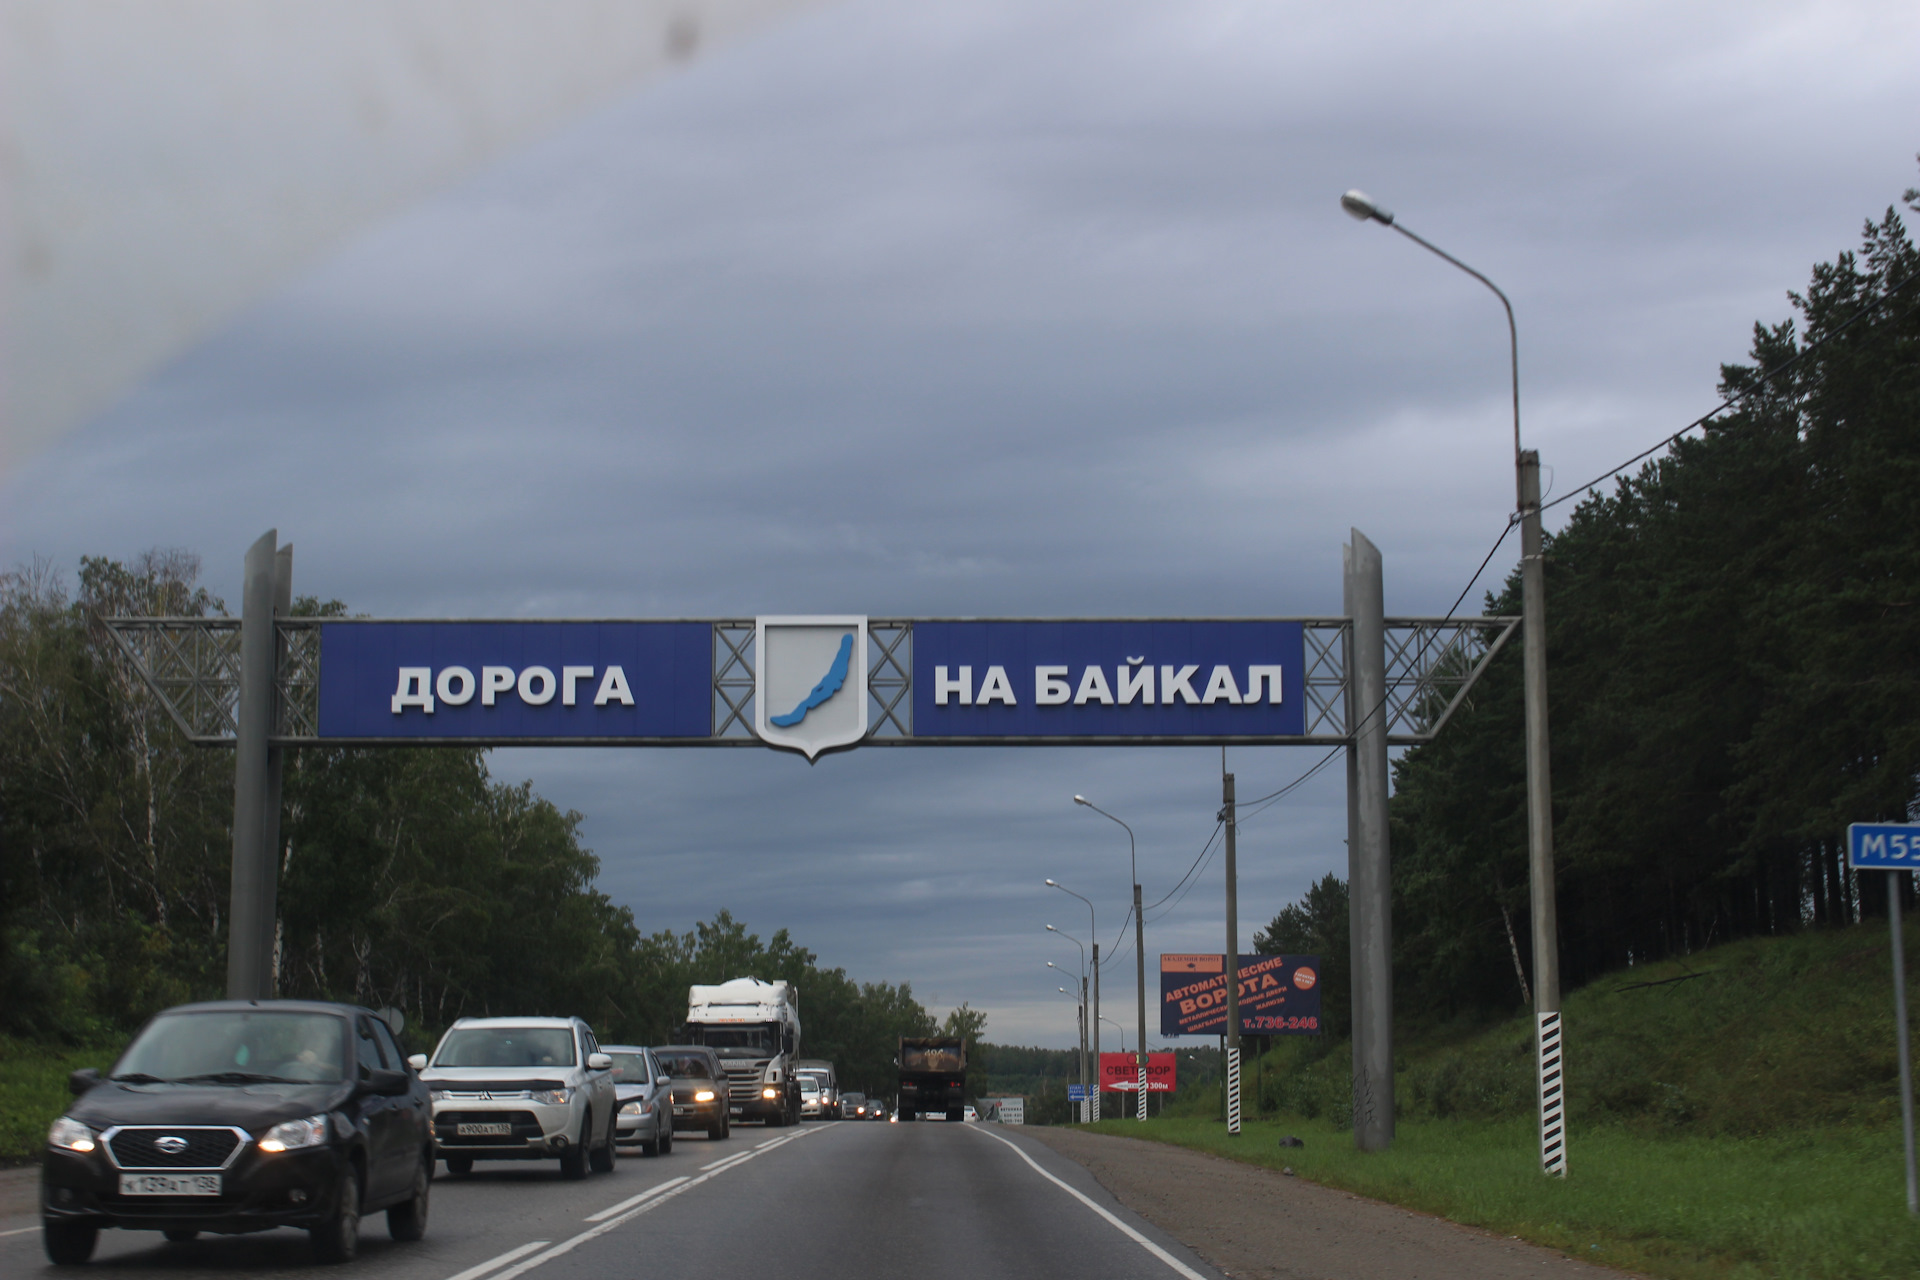 Вывеска на дороге. Дорога на Байкал. Байкал вывеска. Табличка у дороги.